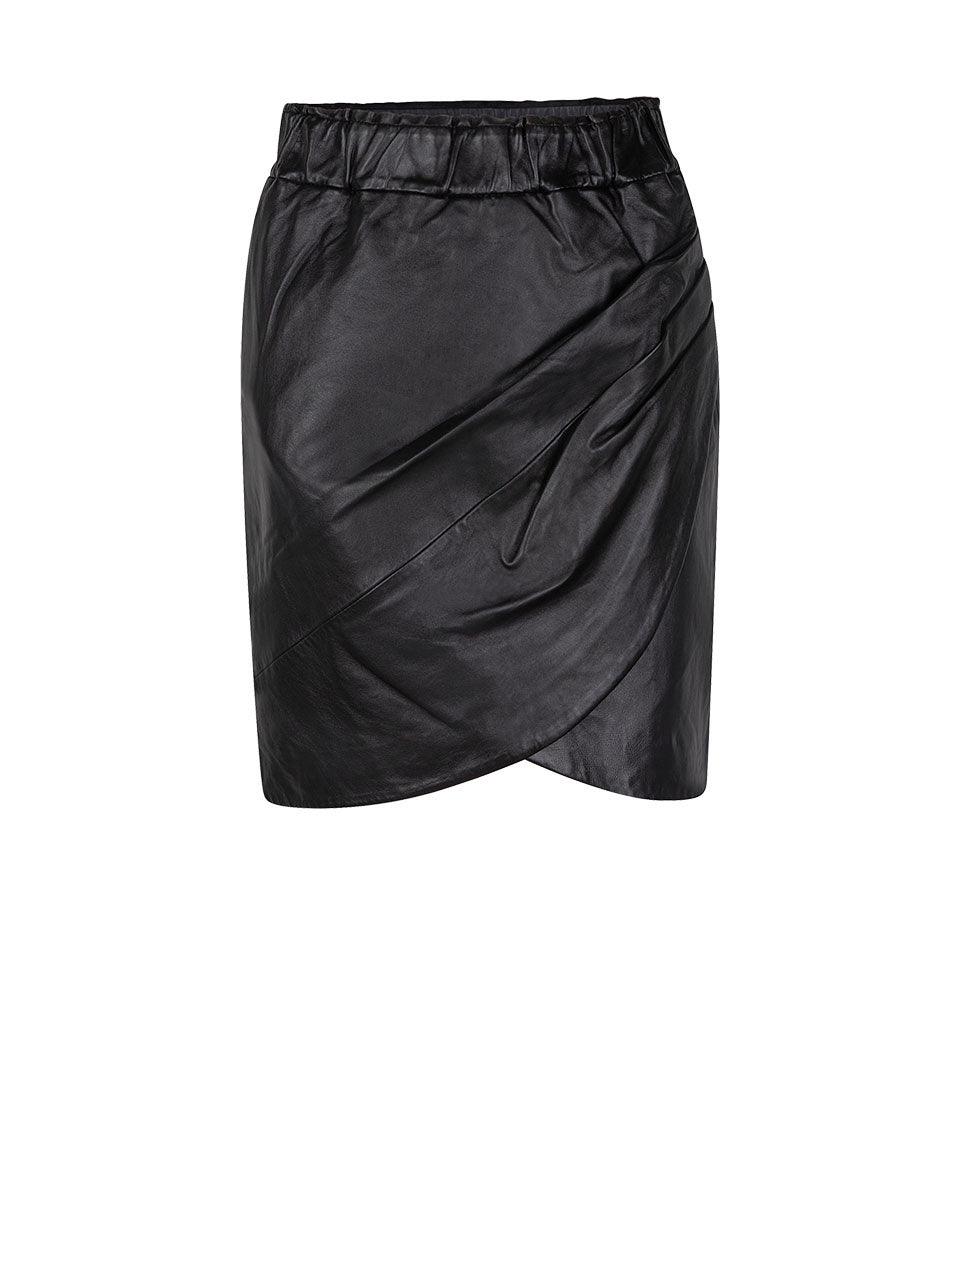 Jaz Leather Skirt Black - No22 Damplassen